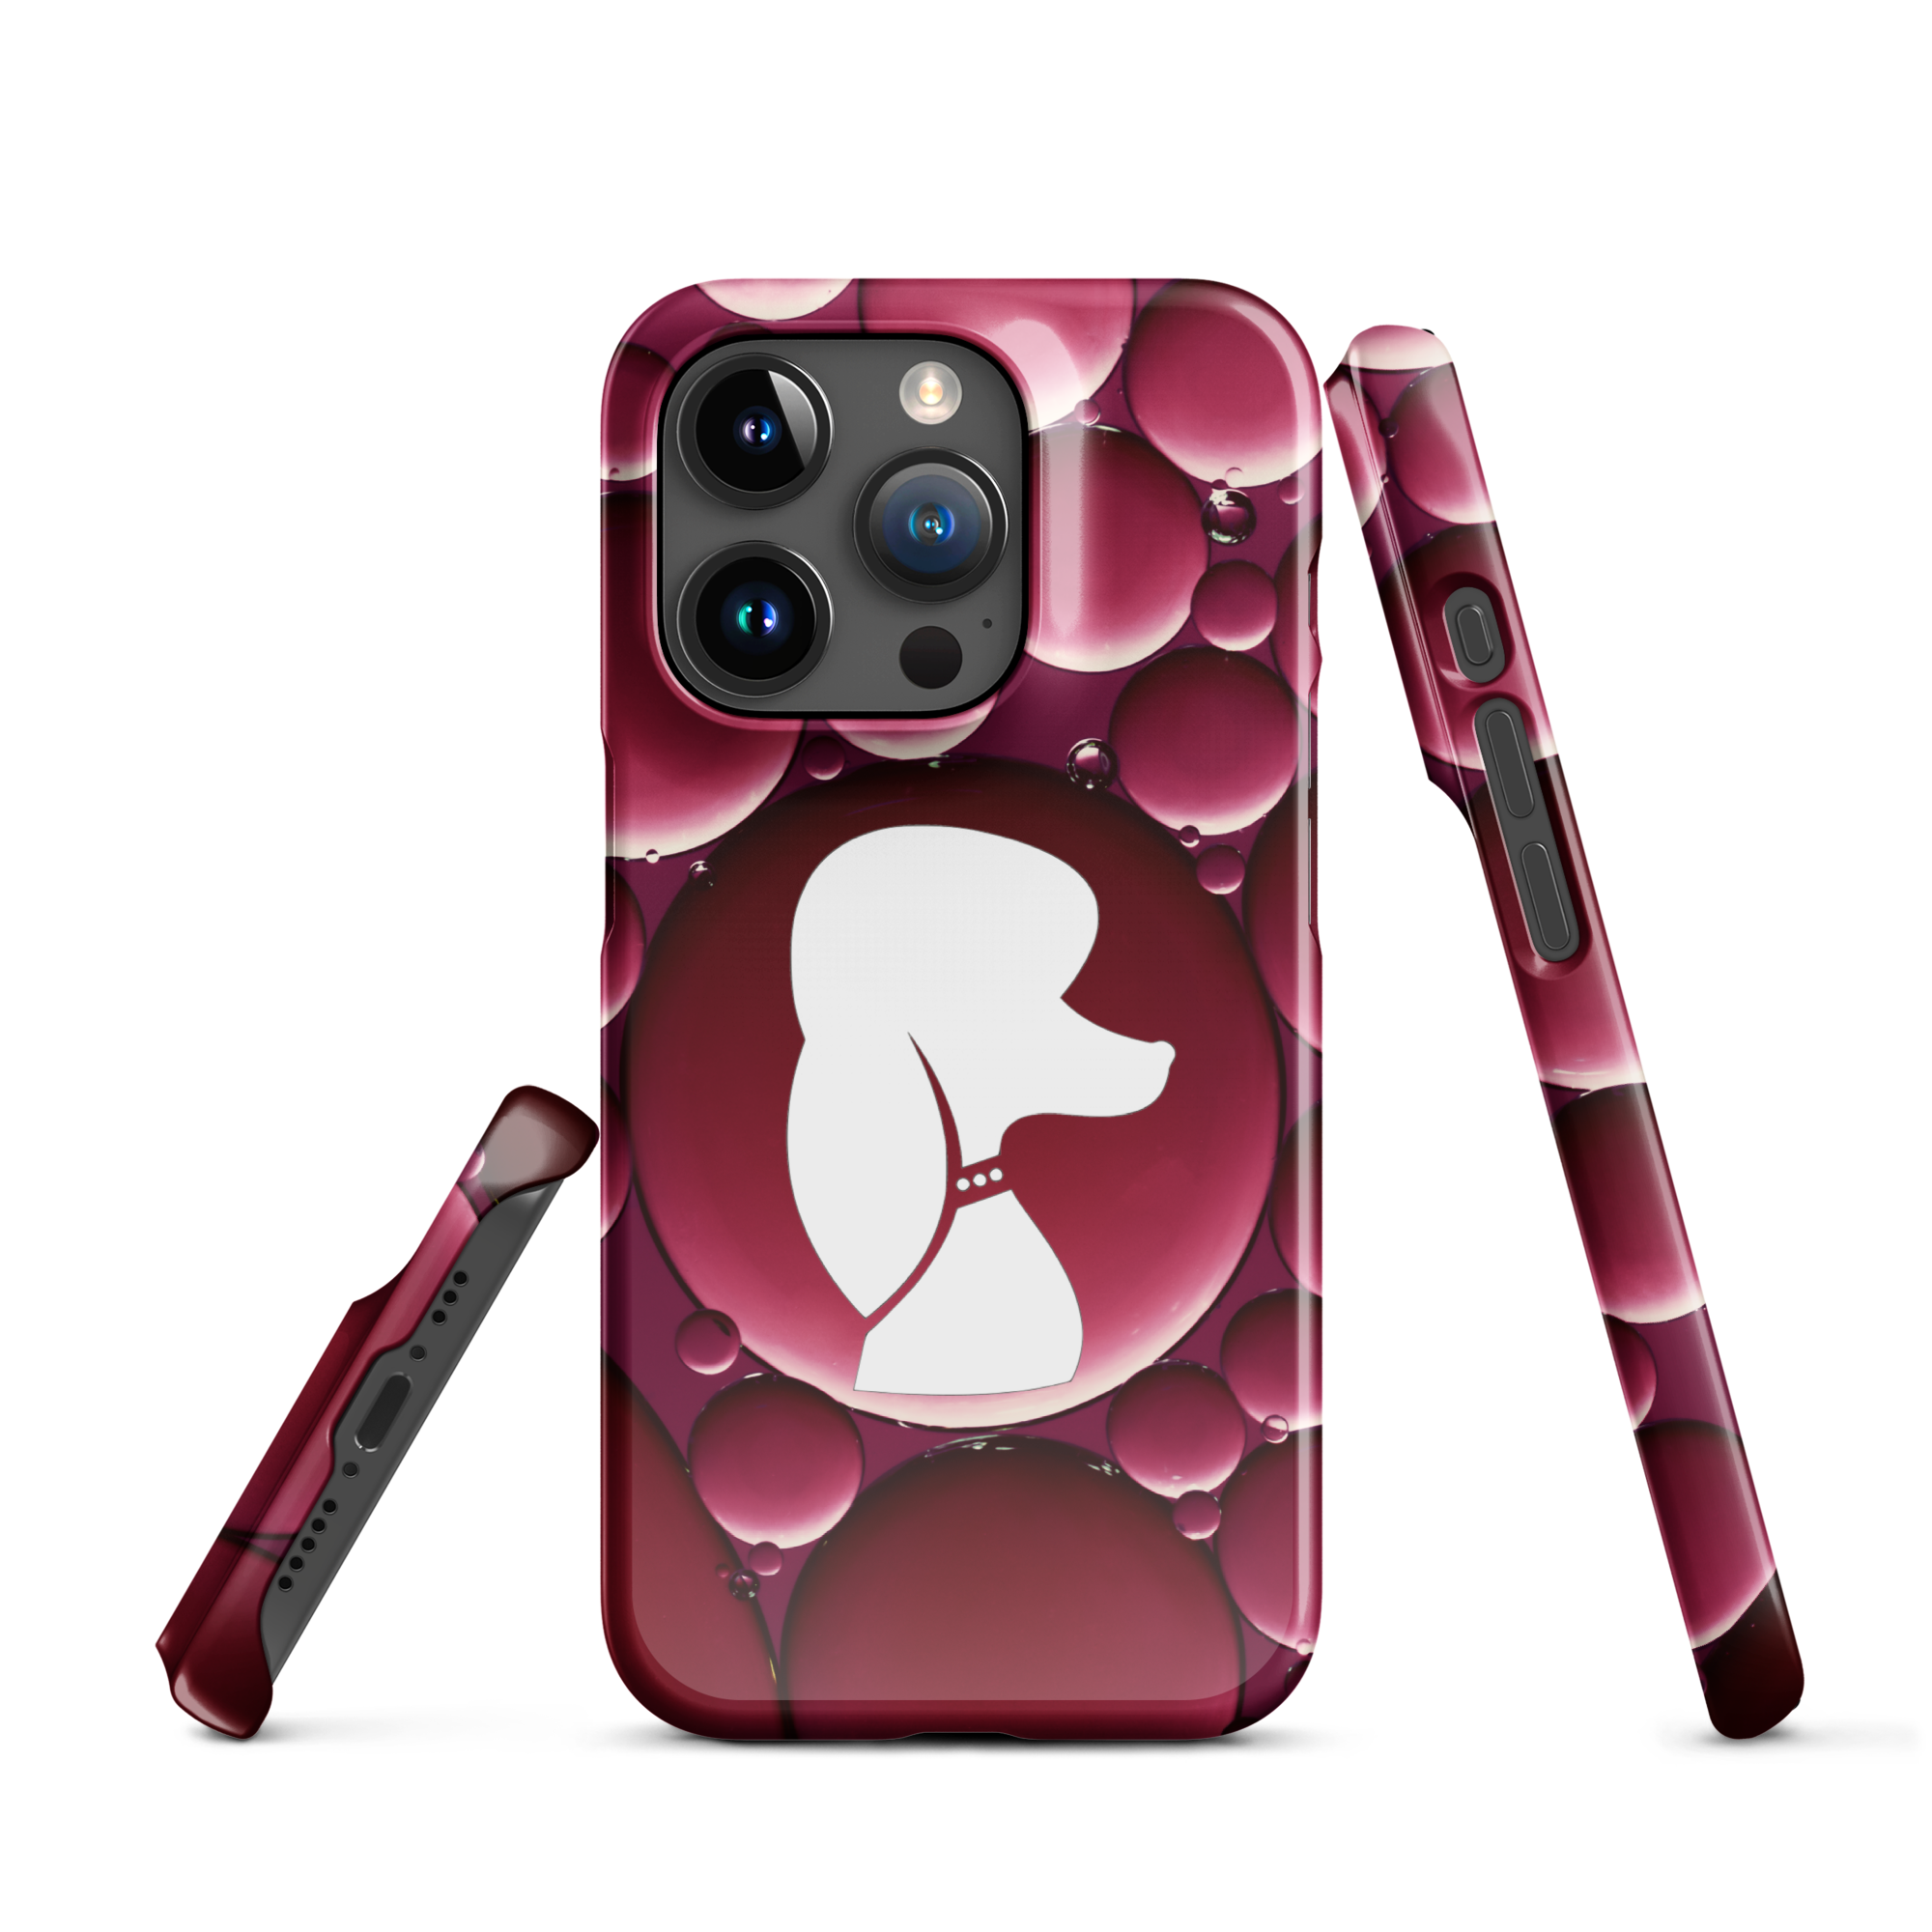 Poodle Bubble Snap case for iPhone®